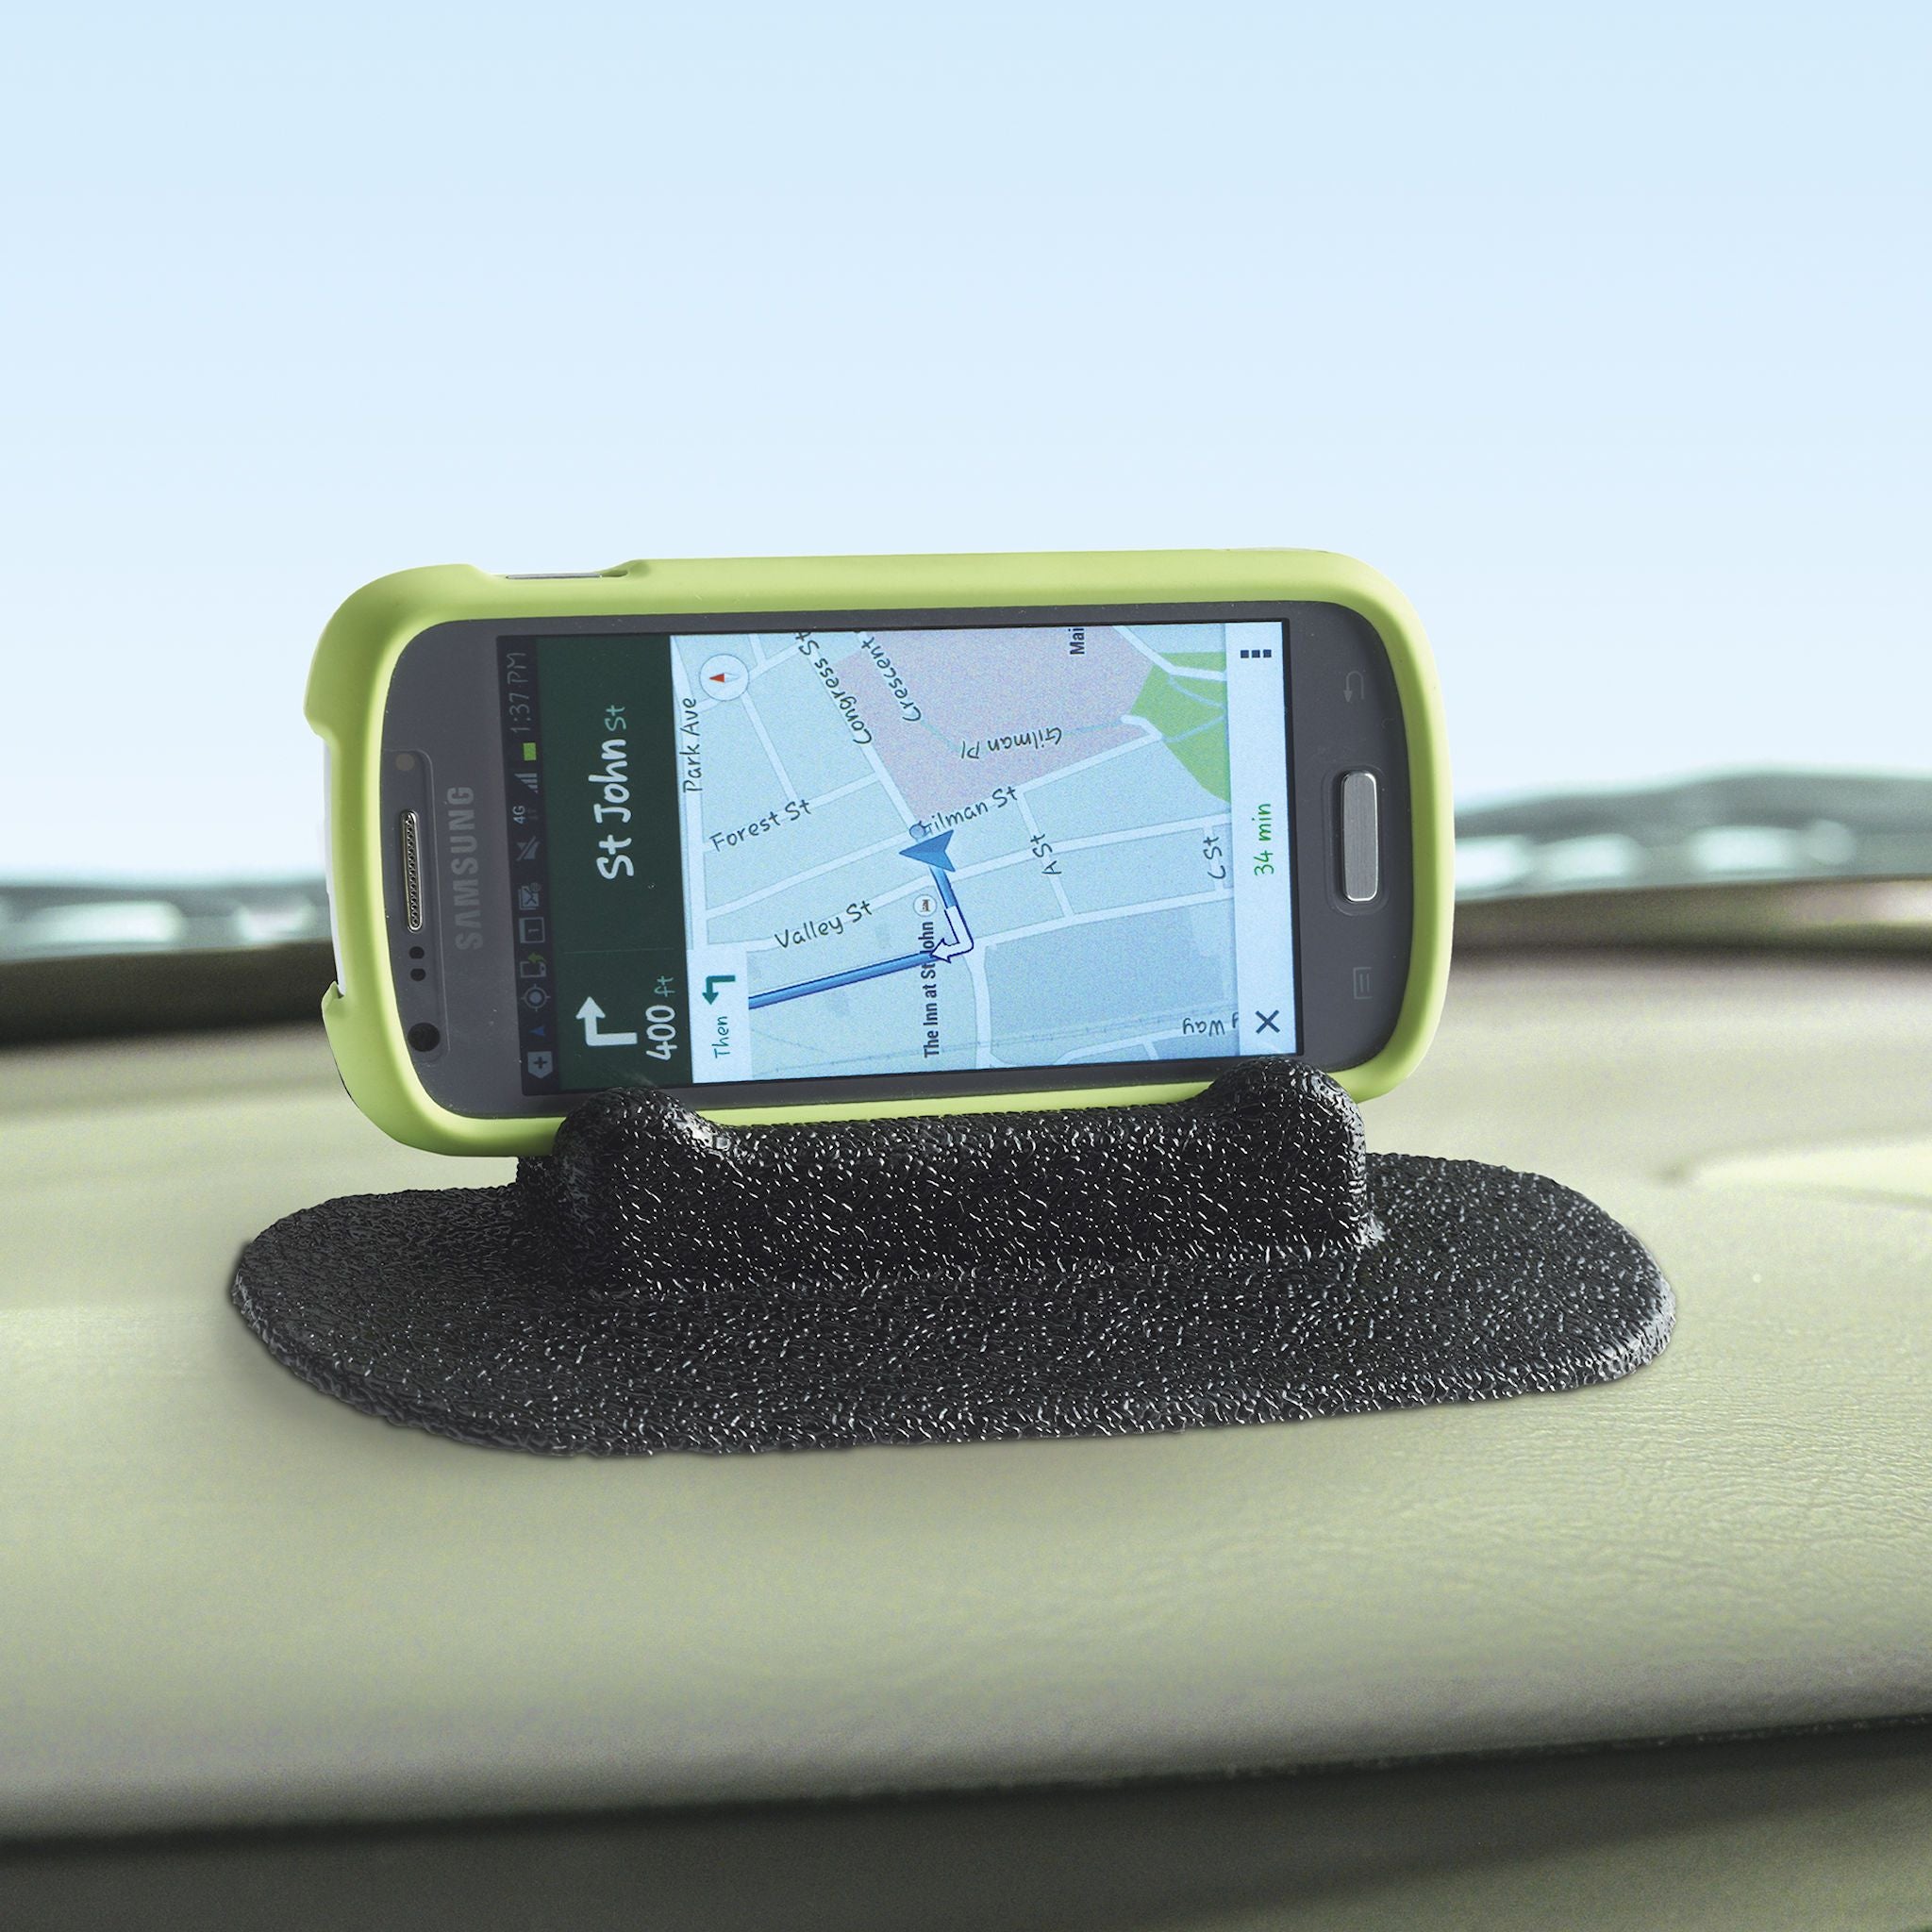 Go-Des magnetic phone mount car phone holder dashboard mount cell